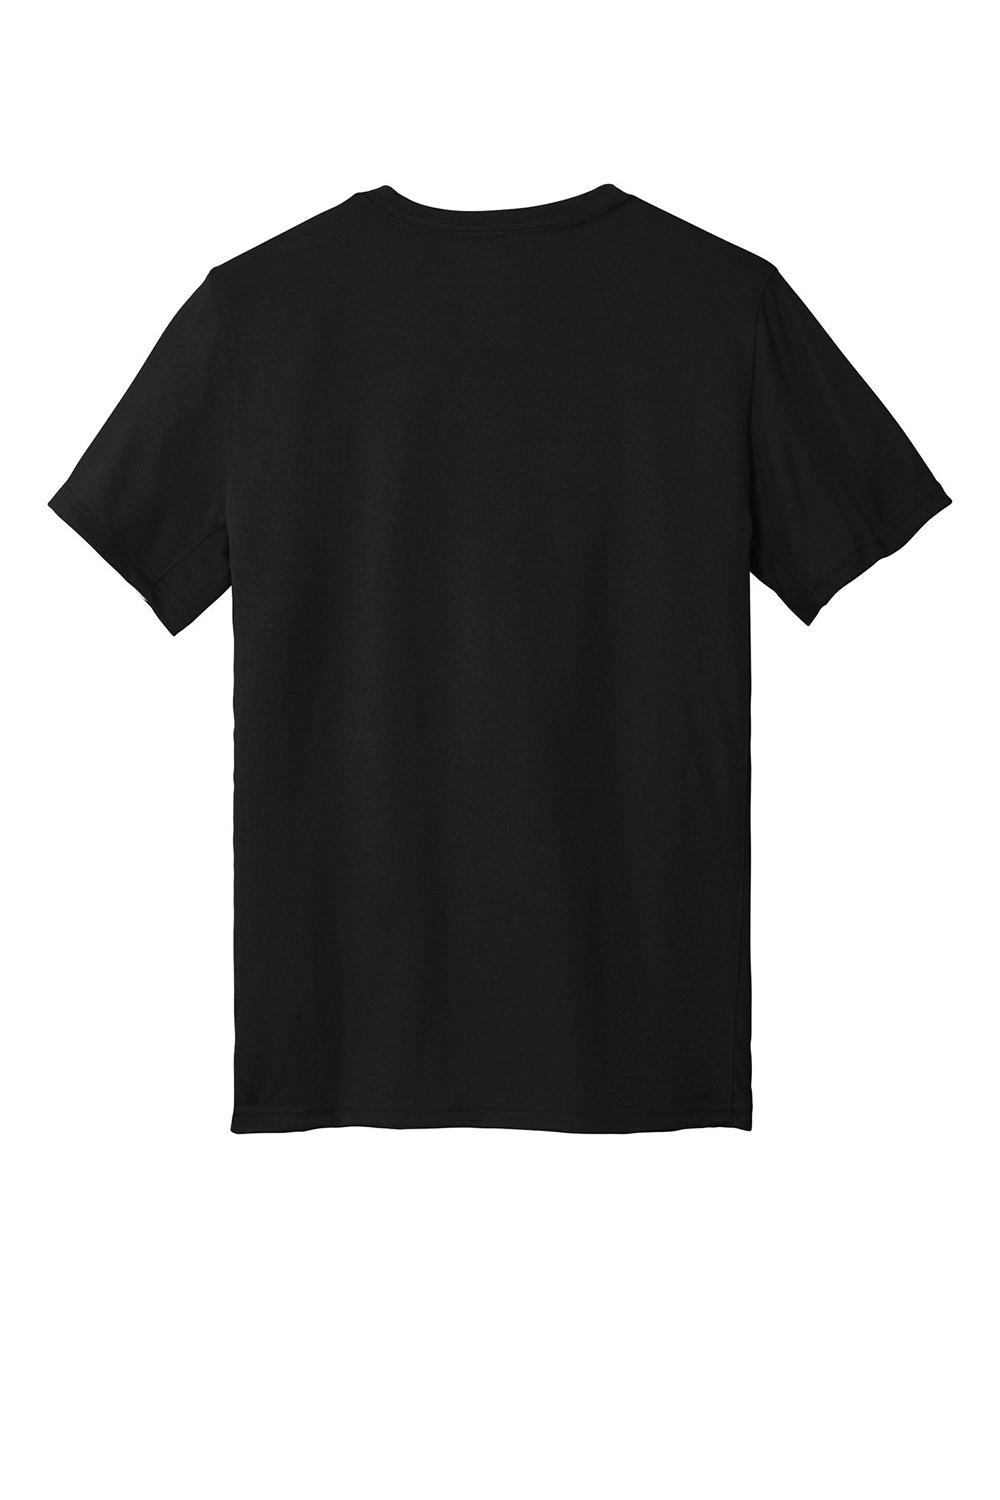 Nike 727982 Mens Legend Dri-Fit Moisture Wicking Short Sleeve Crewneck T-Shirt Black Flat Back